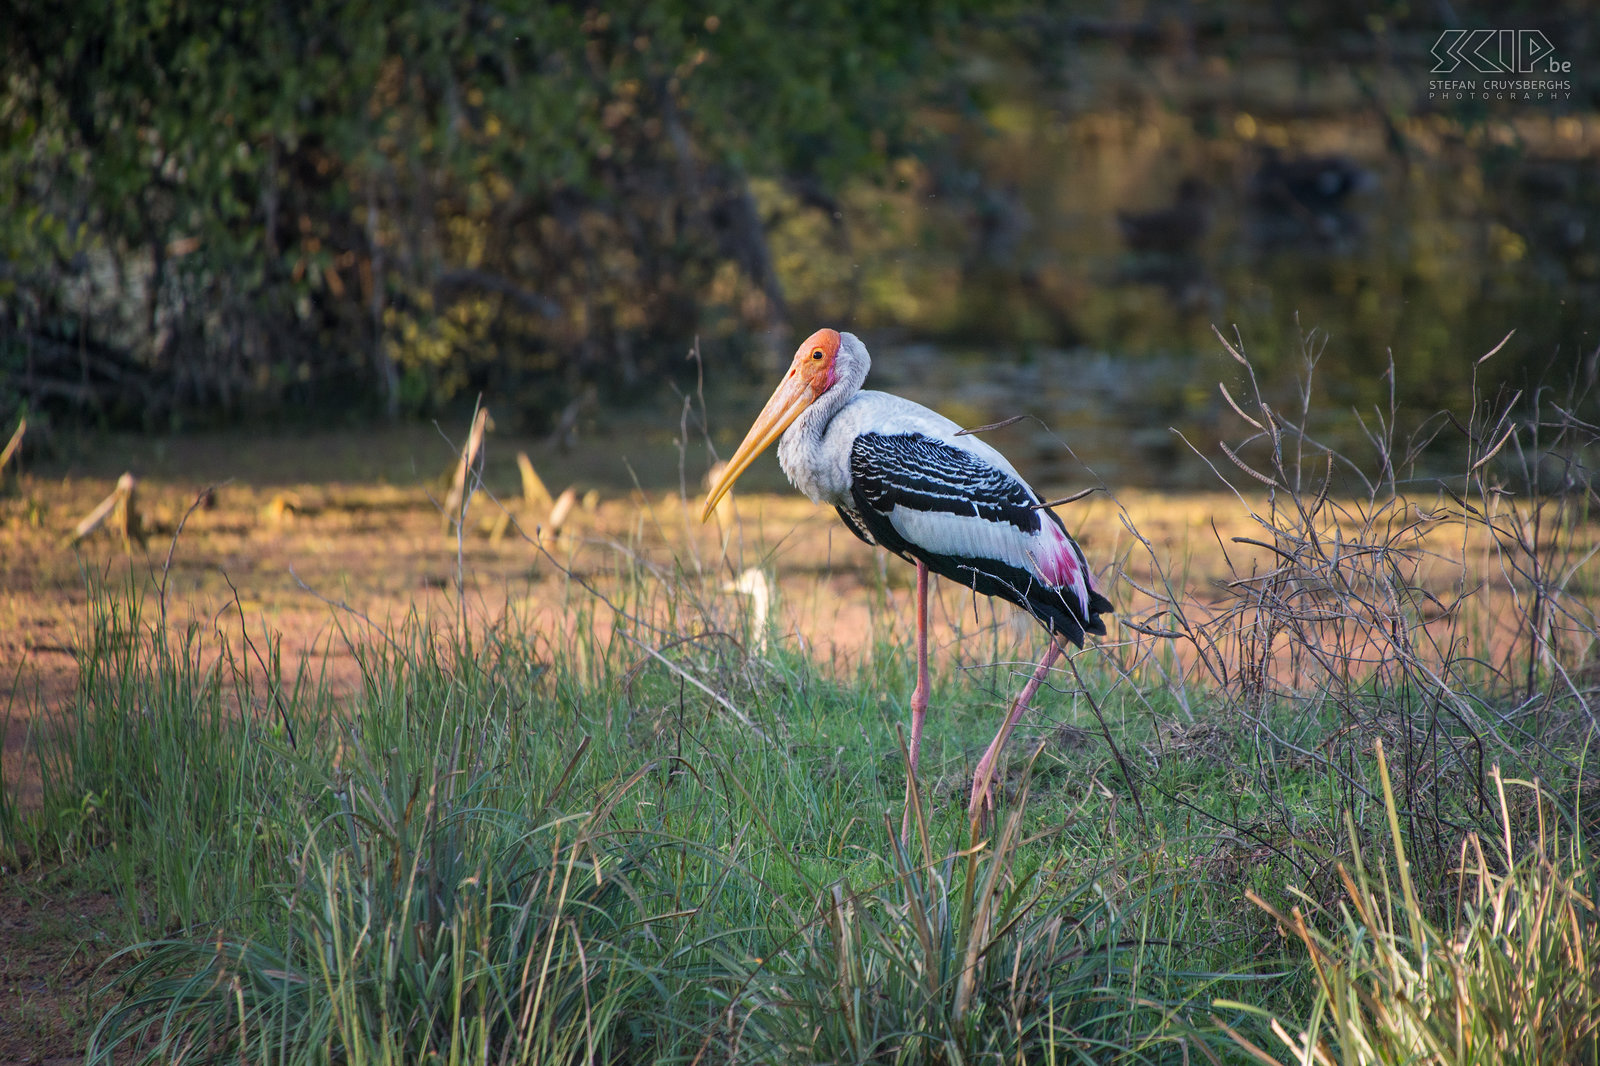 Keoladeo - Painted stork A painted stork (Mycteria leucocephala). Stefan Cruysberghs